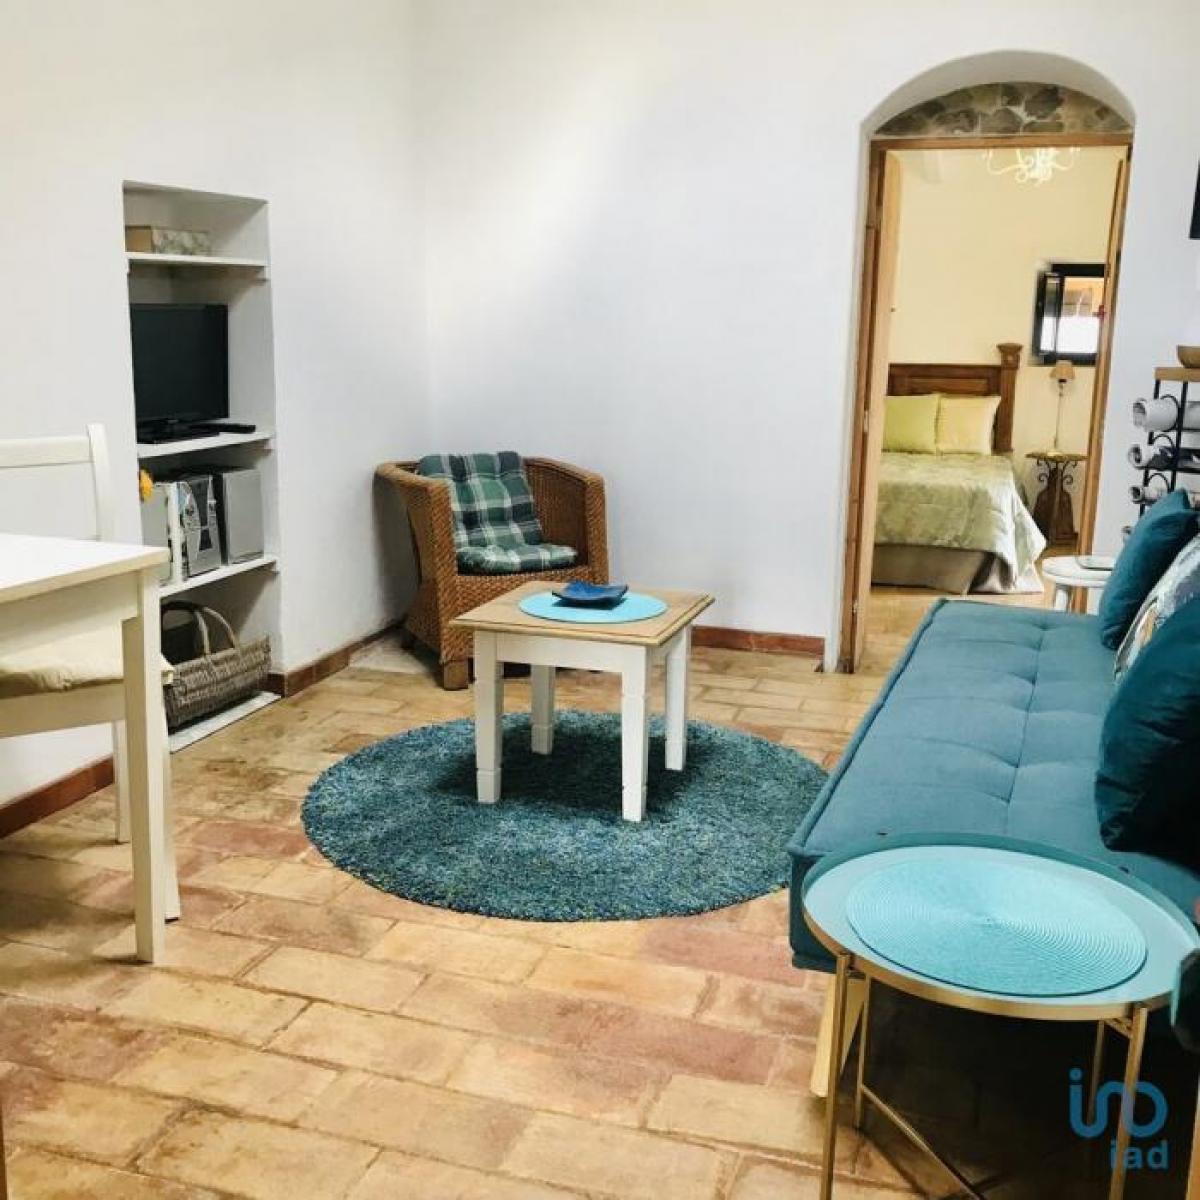 Picture of Home For Sale in Tavira, Algarve, Portugal